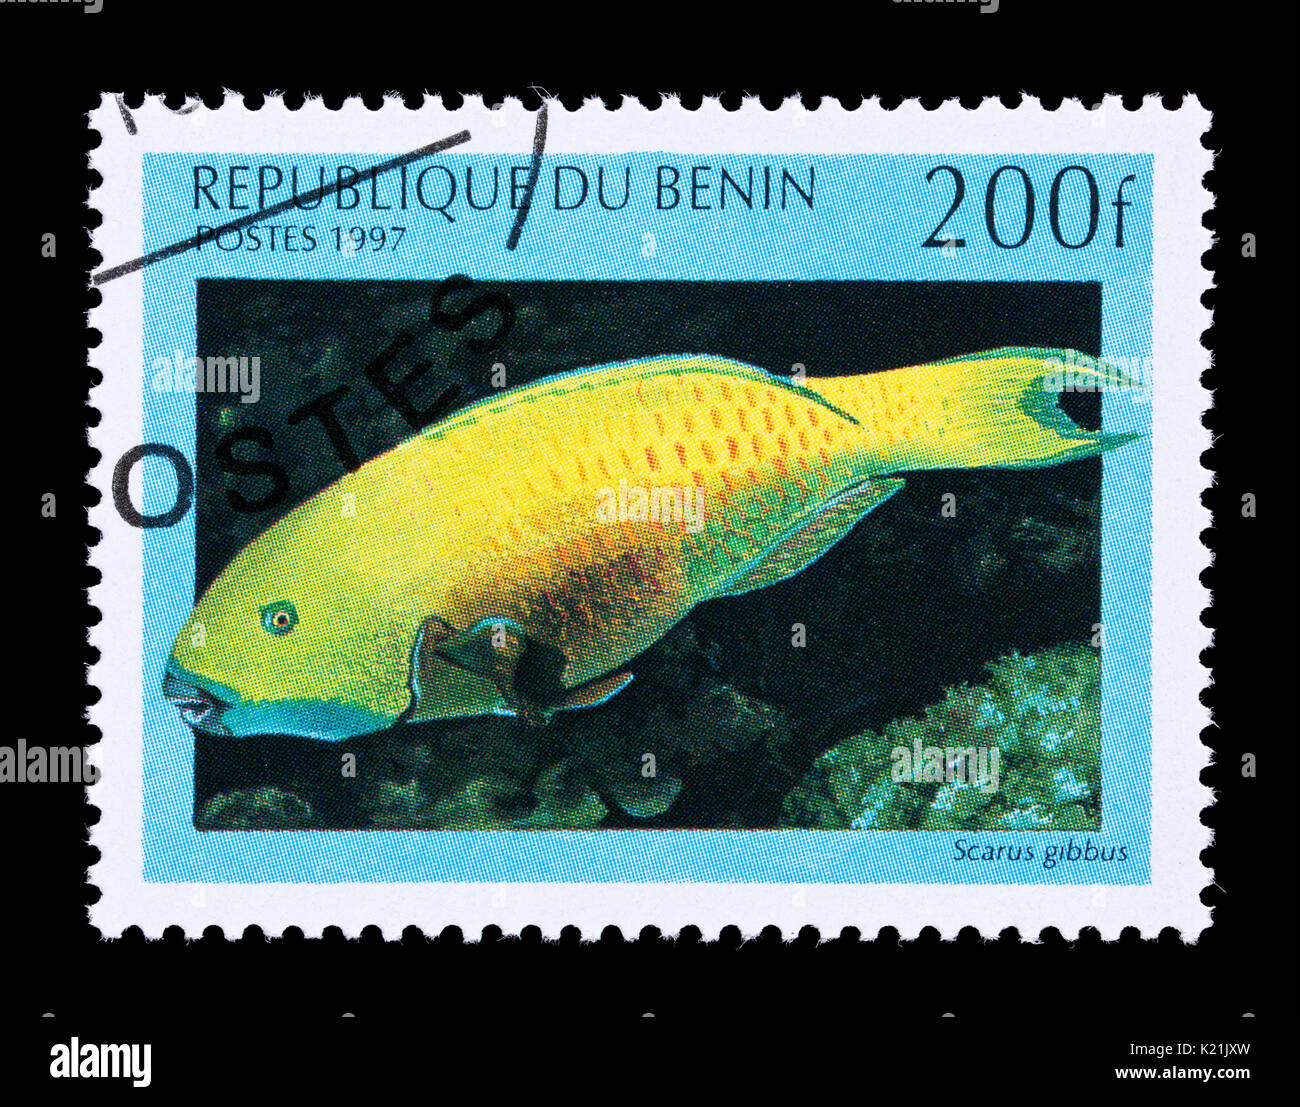 Postage stamp from Benin depicting a heavybeak parrotfish (Scarus gibbus) Stock Photo